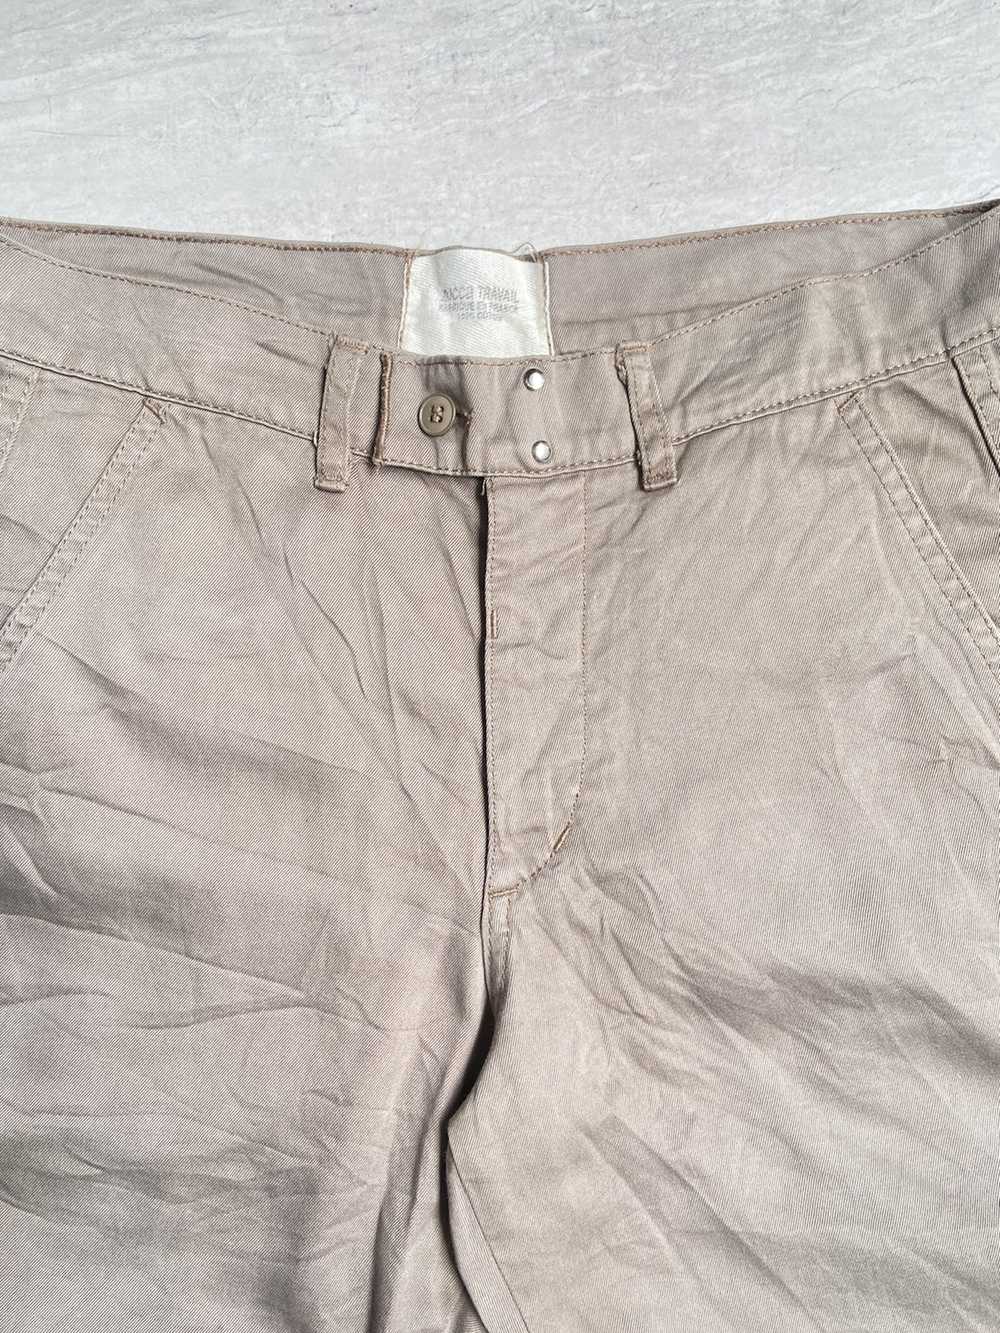 Issey Miyake × Zucca ZUCCA TRAVAIL Long Pants - image 3